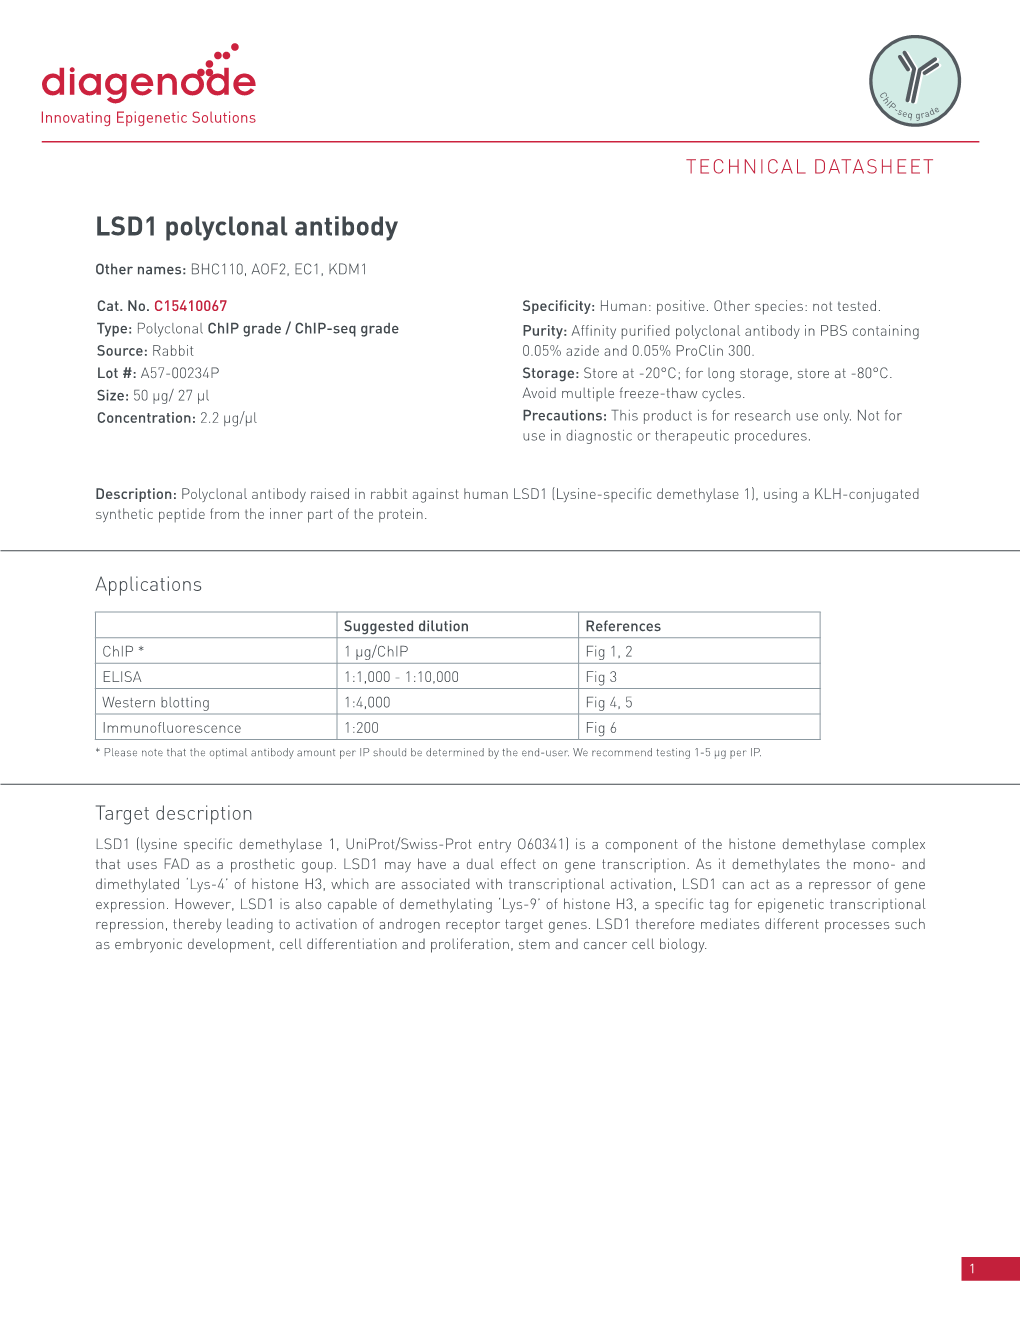 LSD1 Polyclonal Antibody